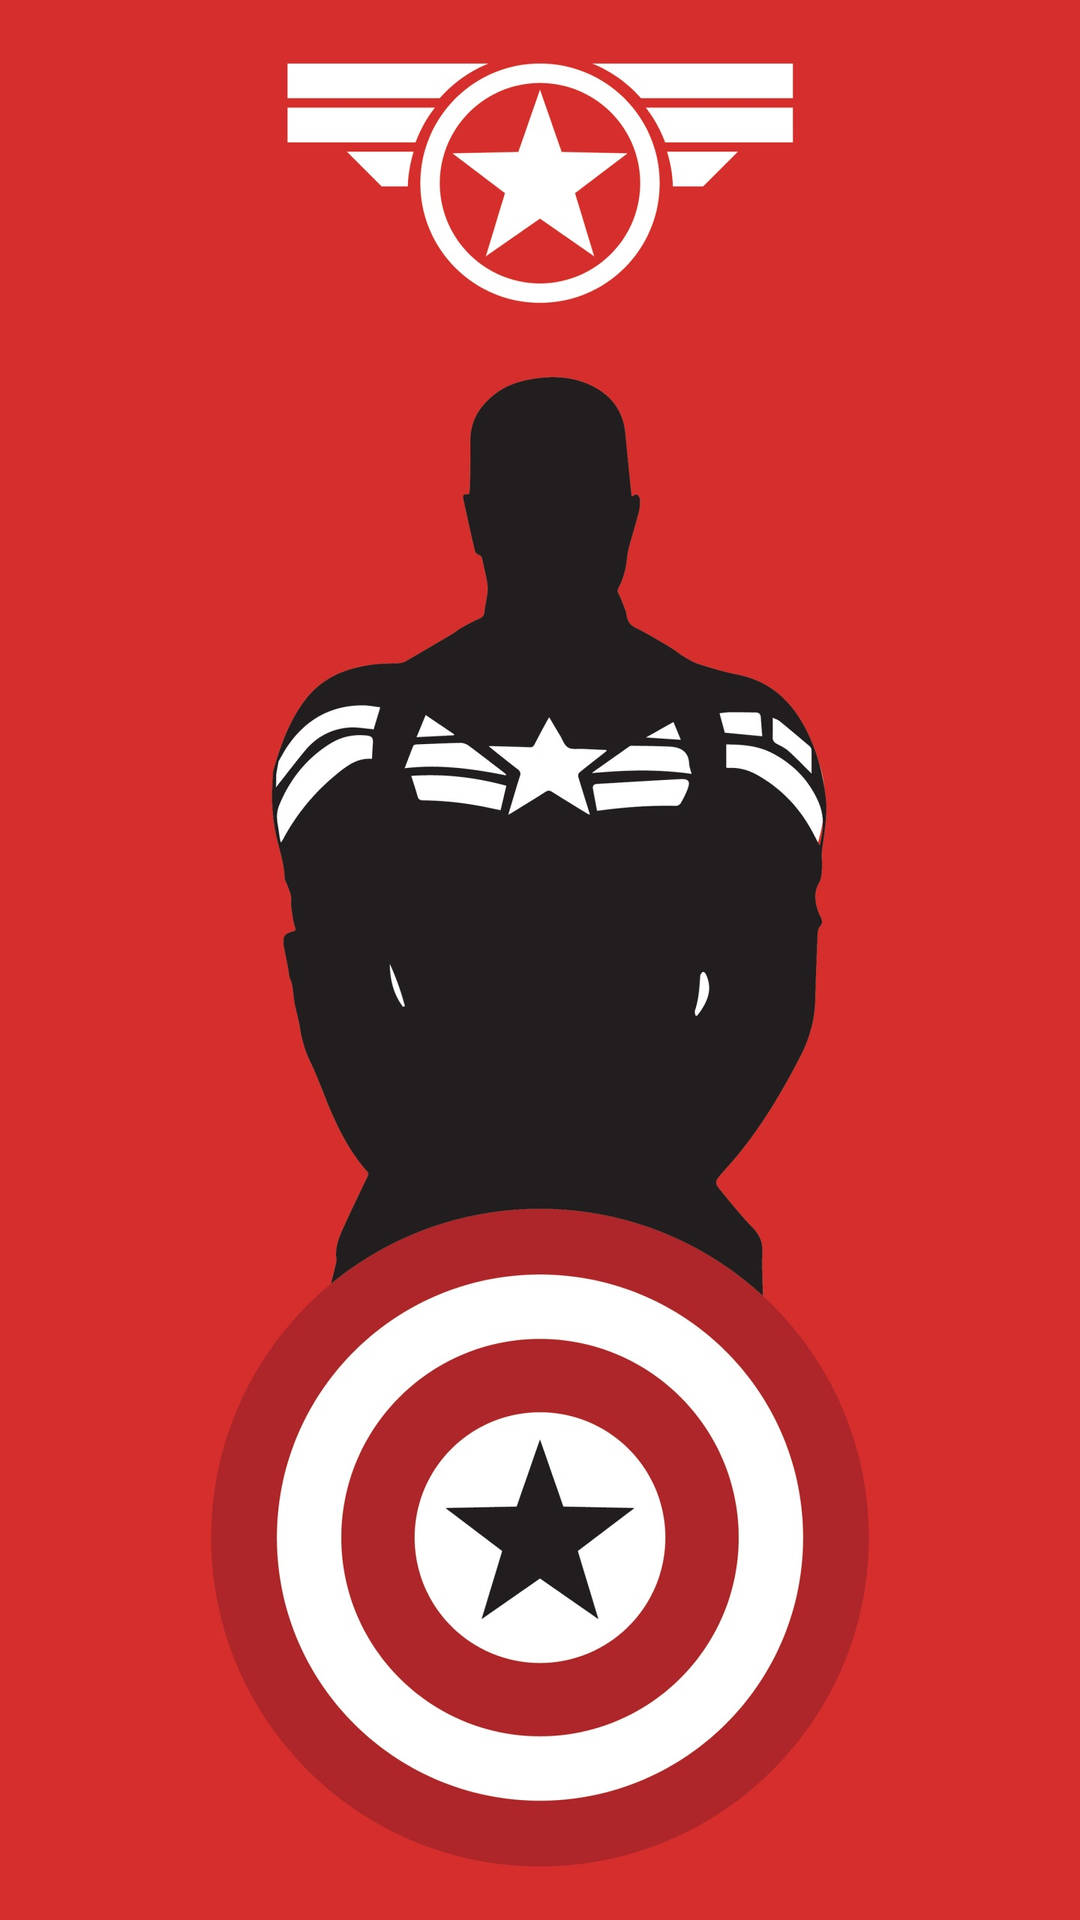 Captain America Superhero Red Star Shield Logo Background